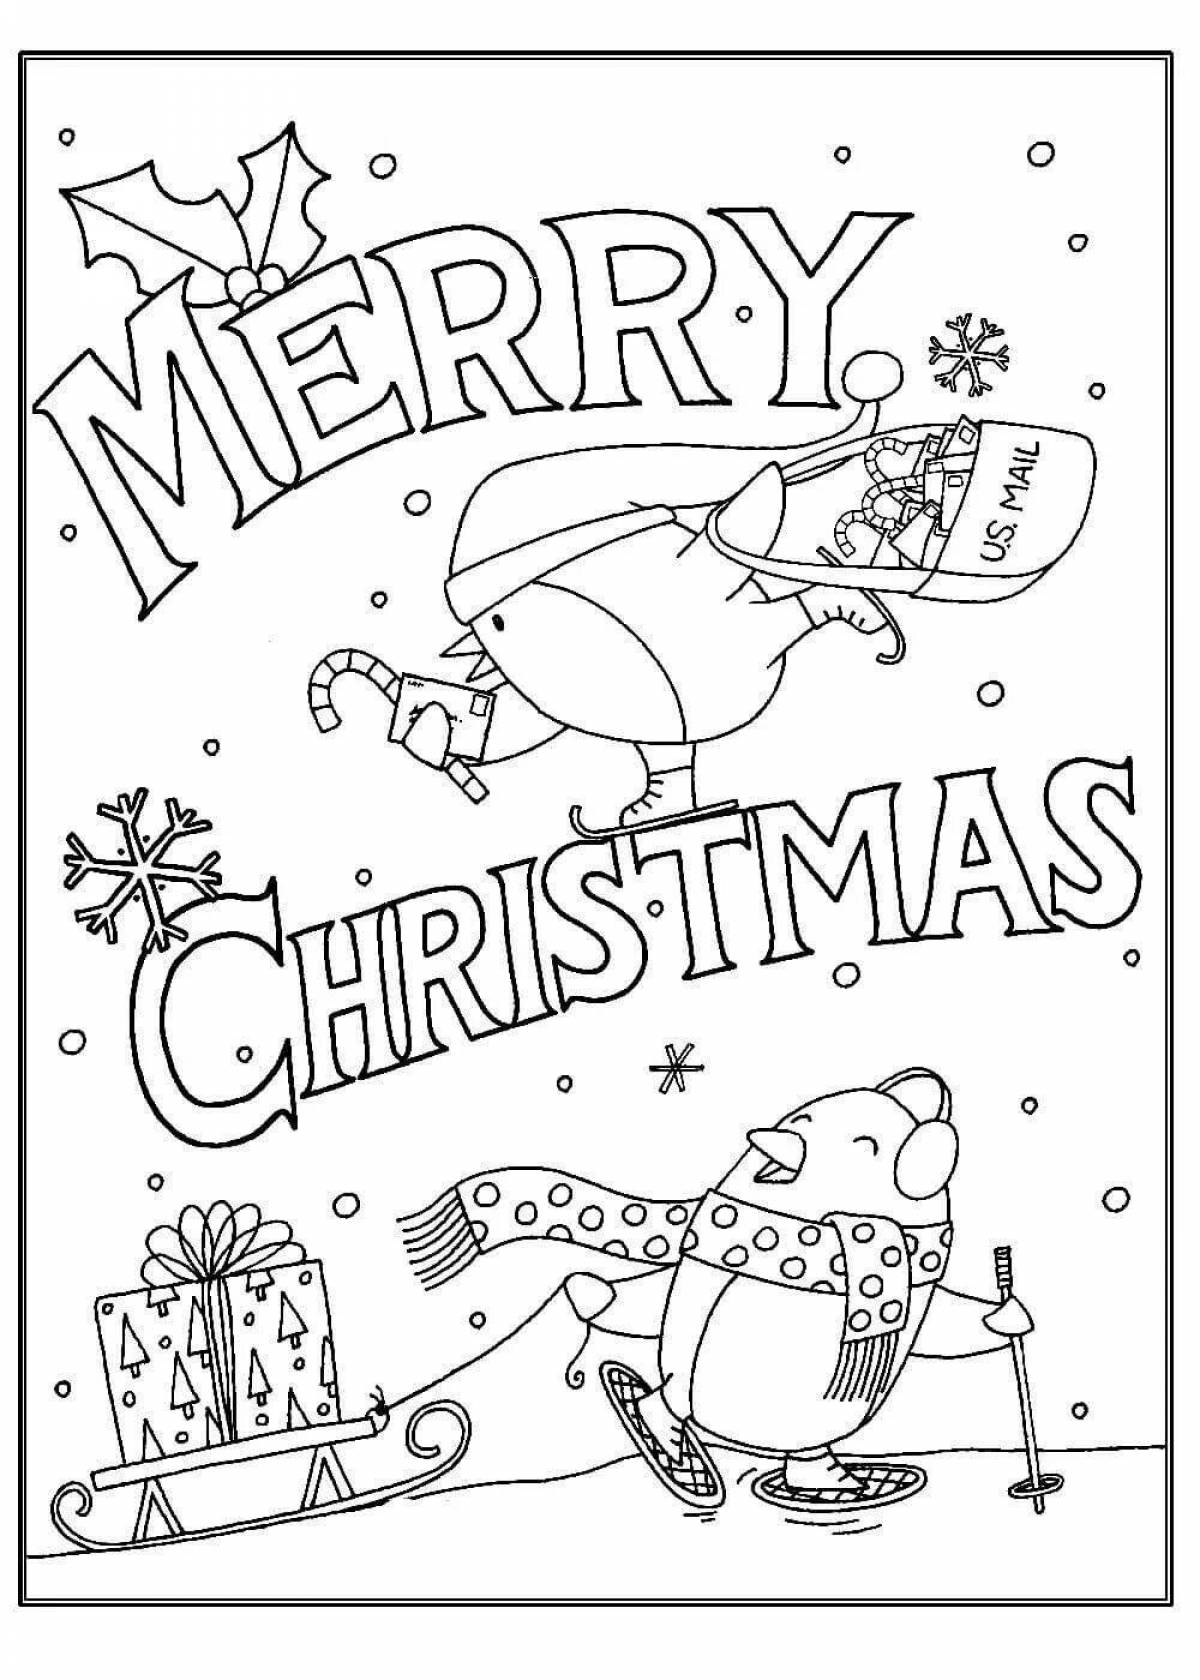 Merry Christmas открытка раскраска для детей